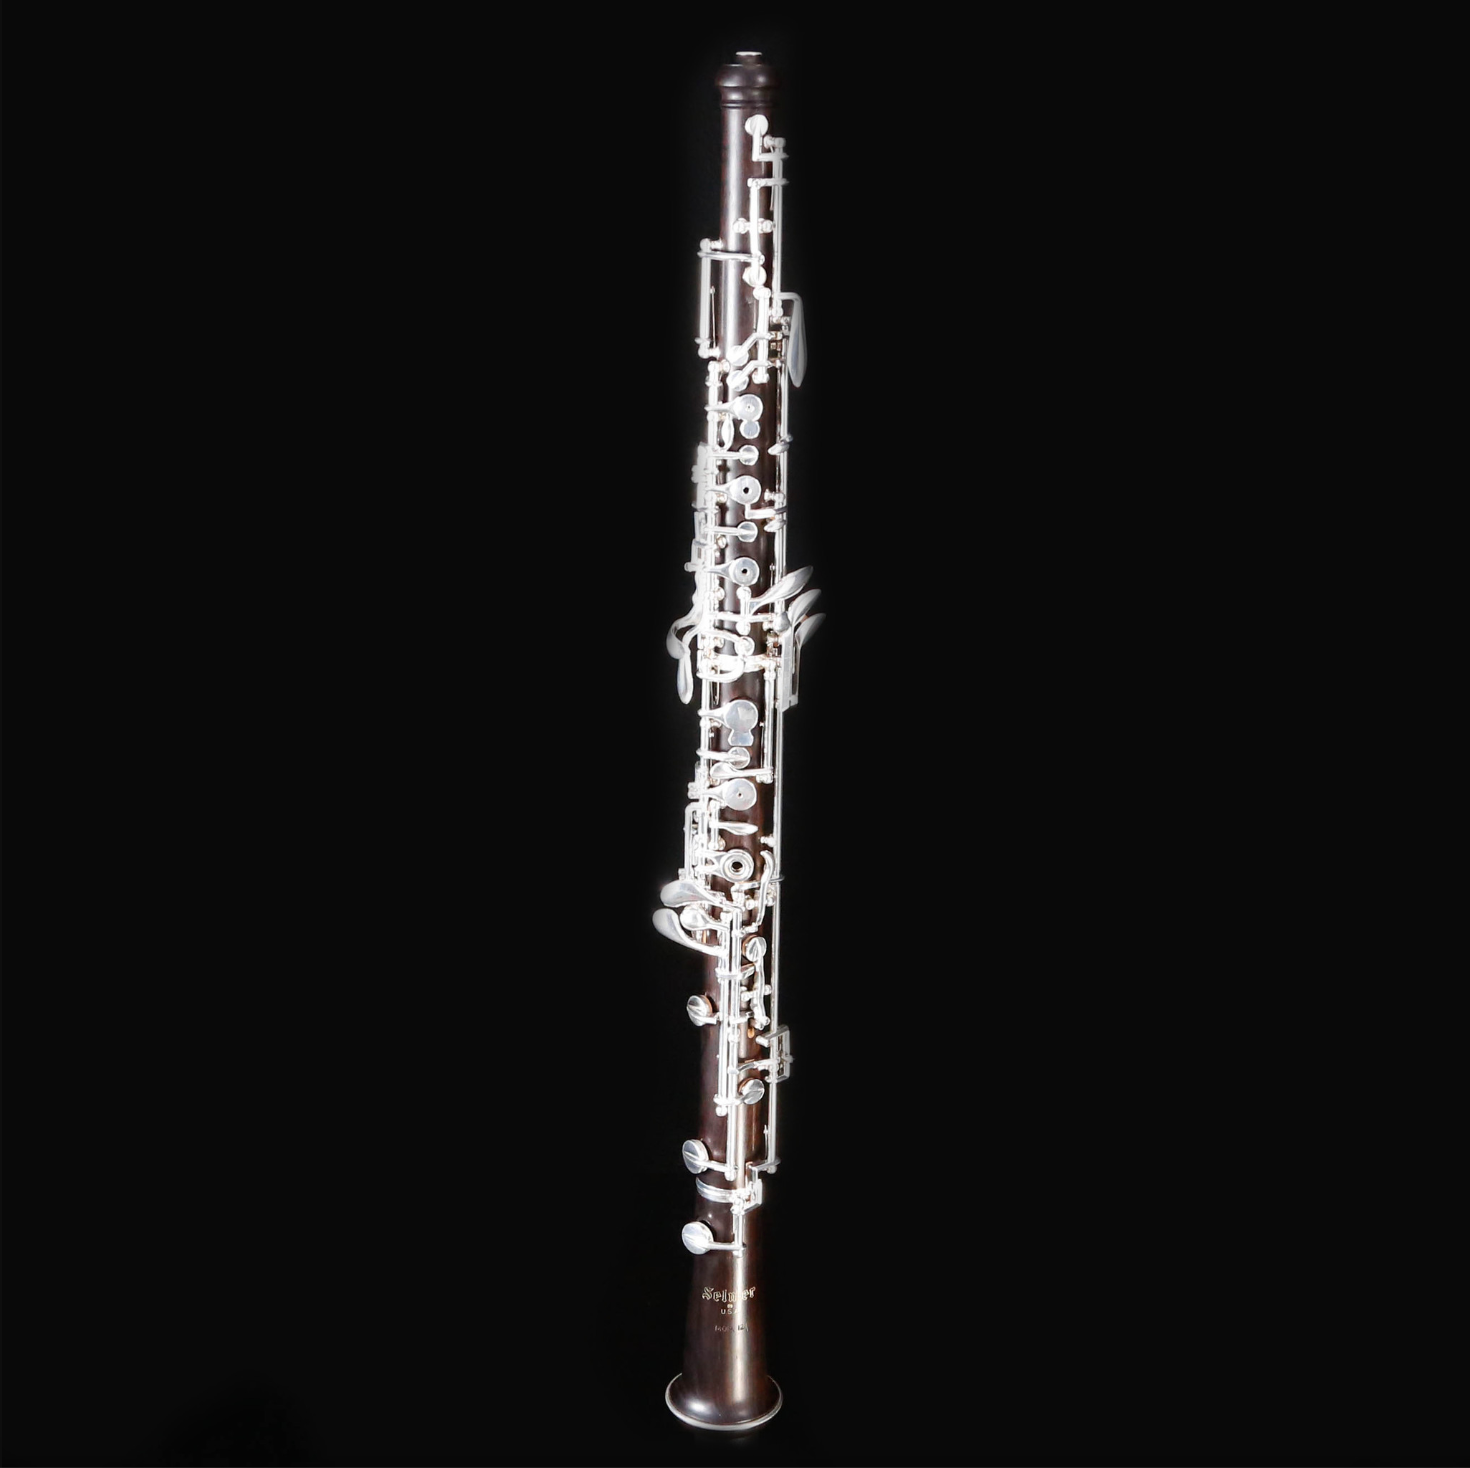 Selmer 121 Standard Oboe, Granadilla Body, Full Conservatory